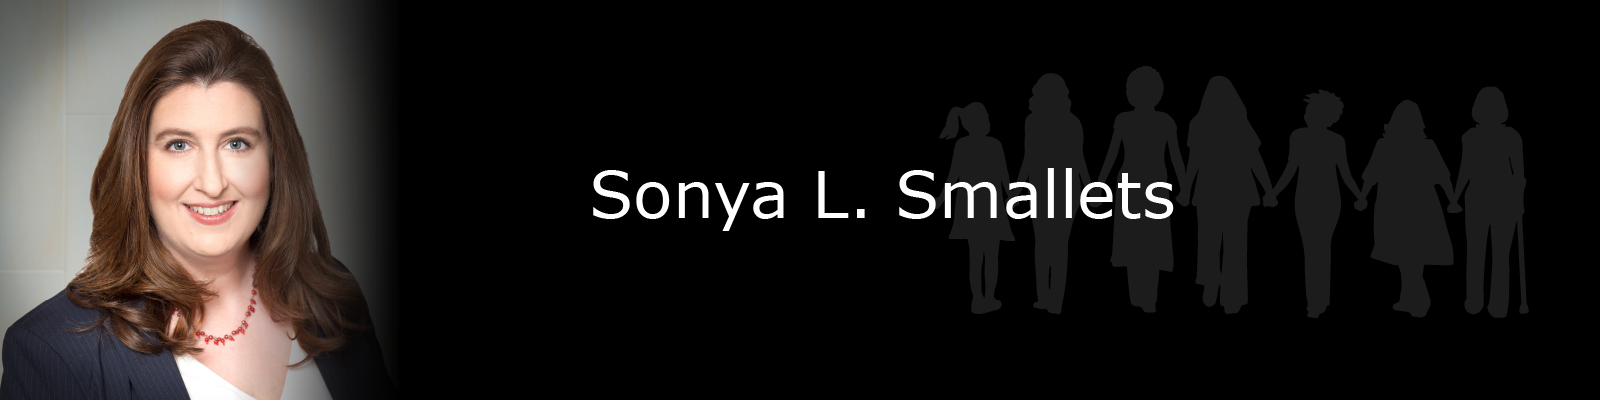 Photo of Sonya L. Smallets.